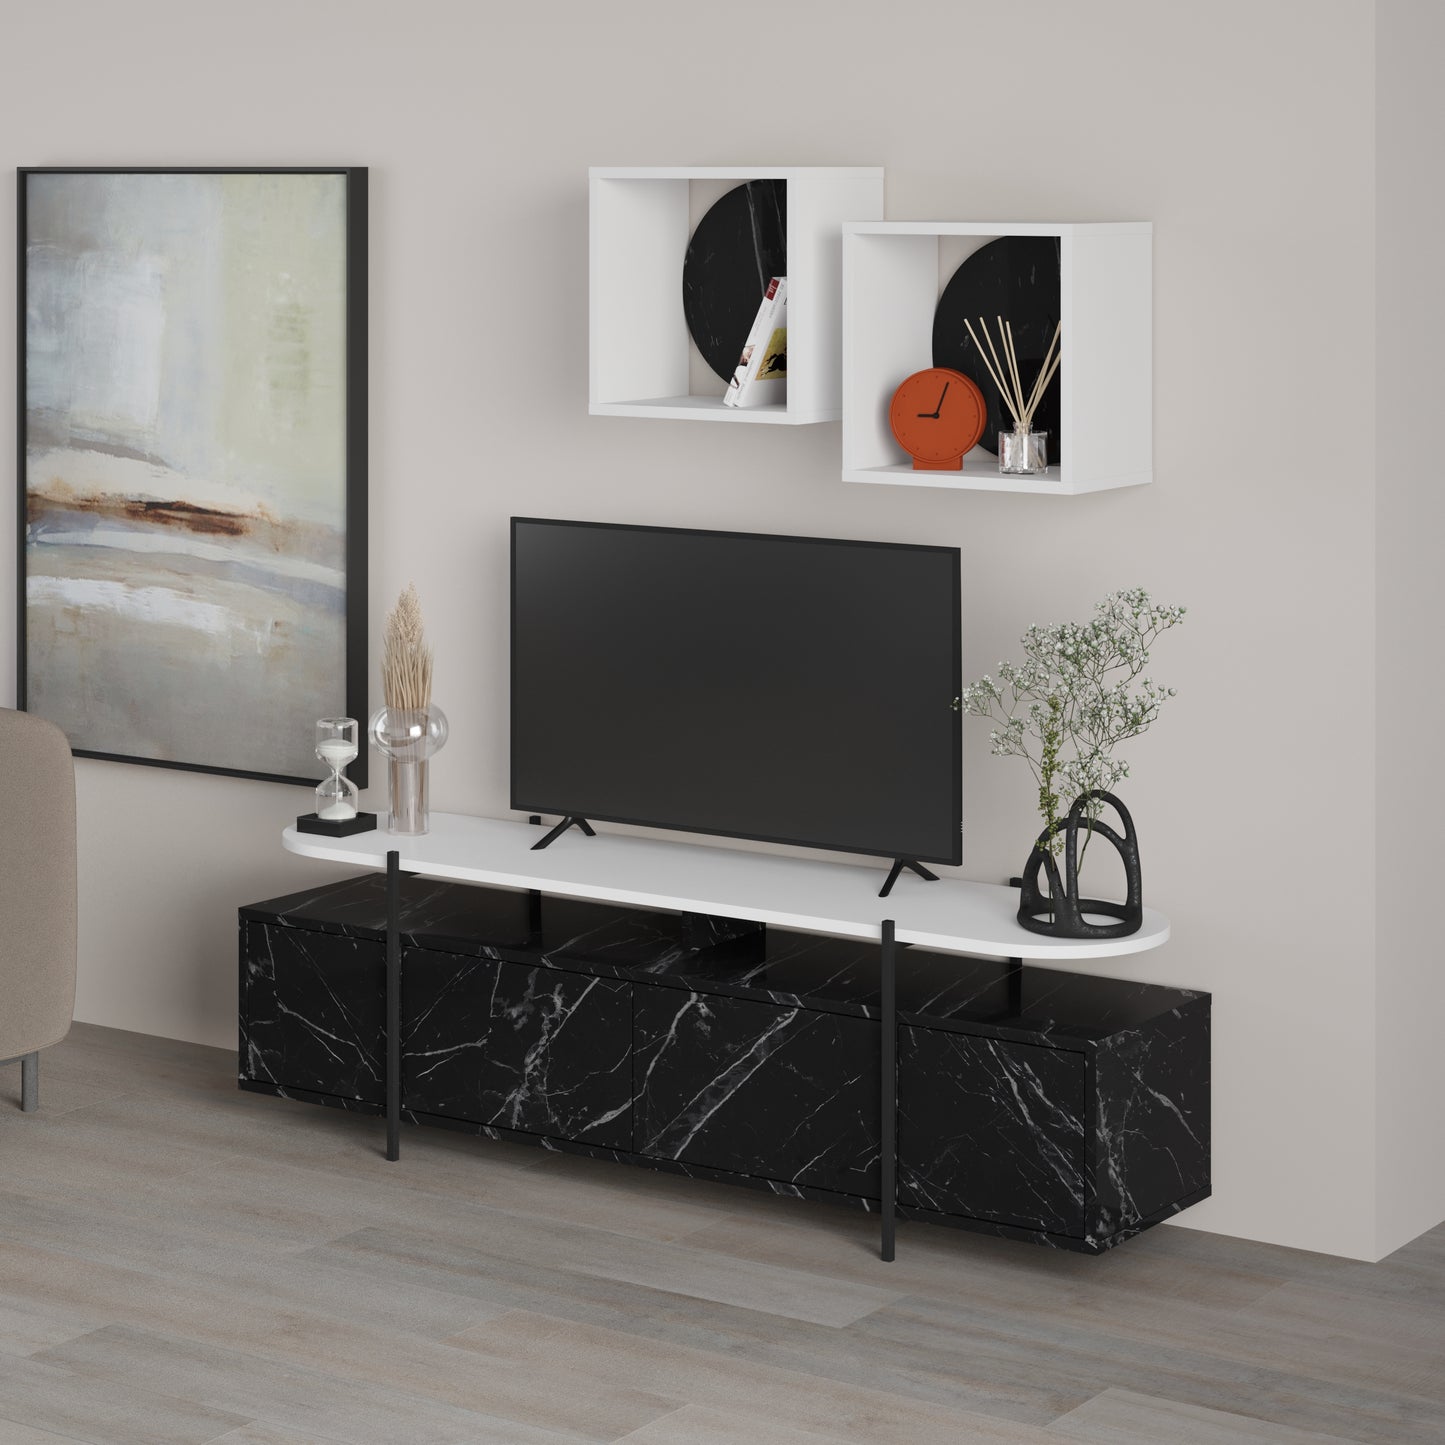 Hanley Modern Tv Unit With Wall Storage Unit 160cm - Decortie